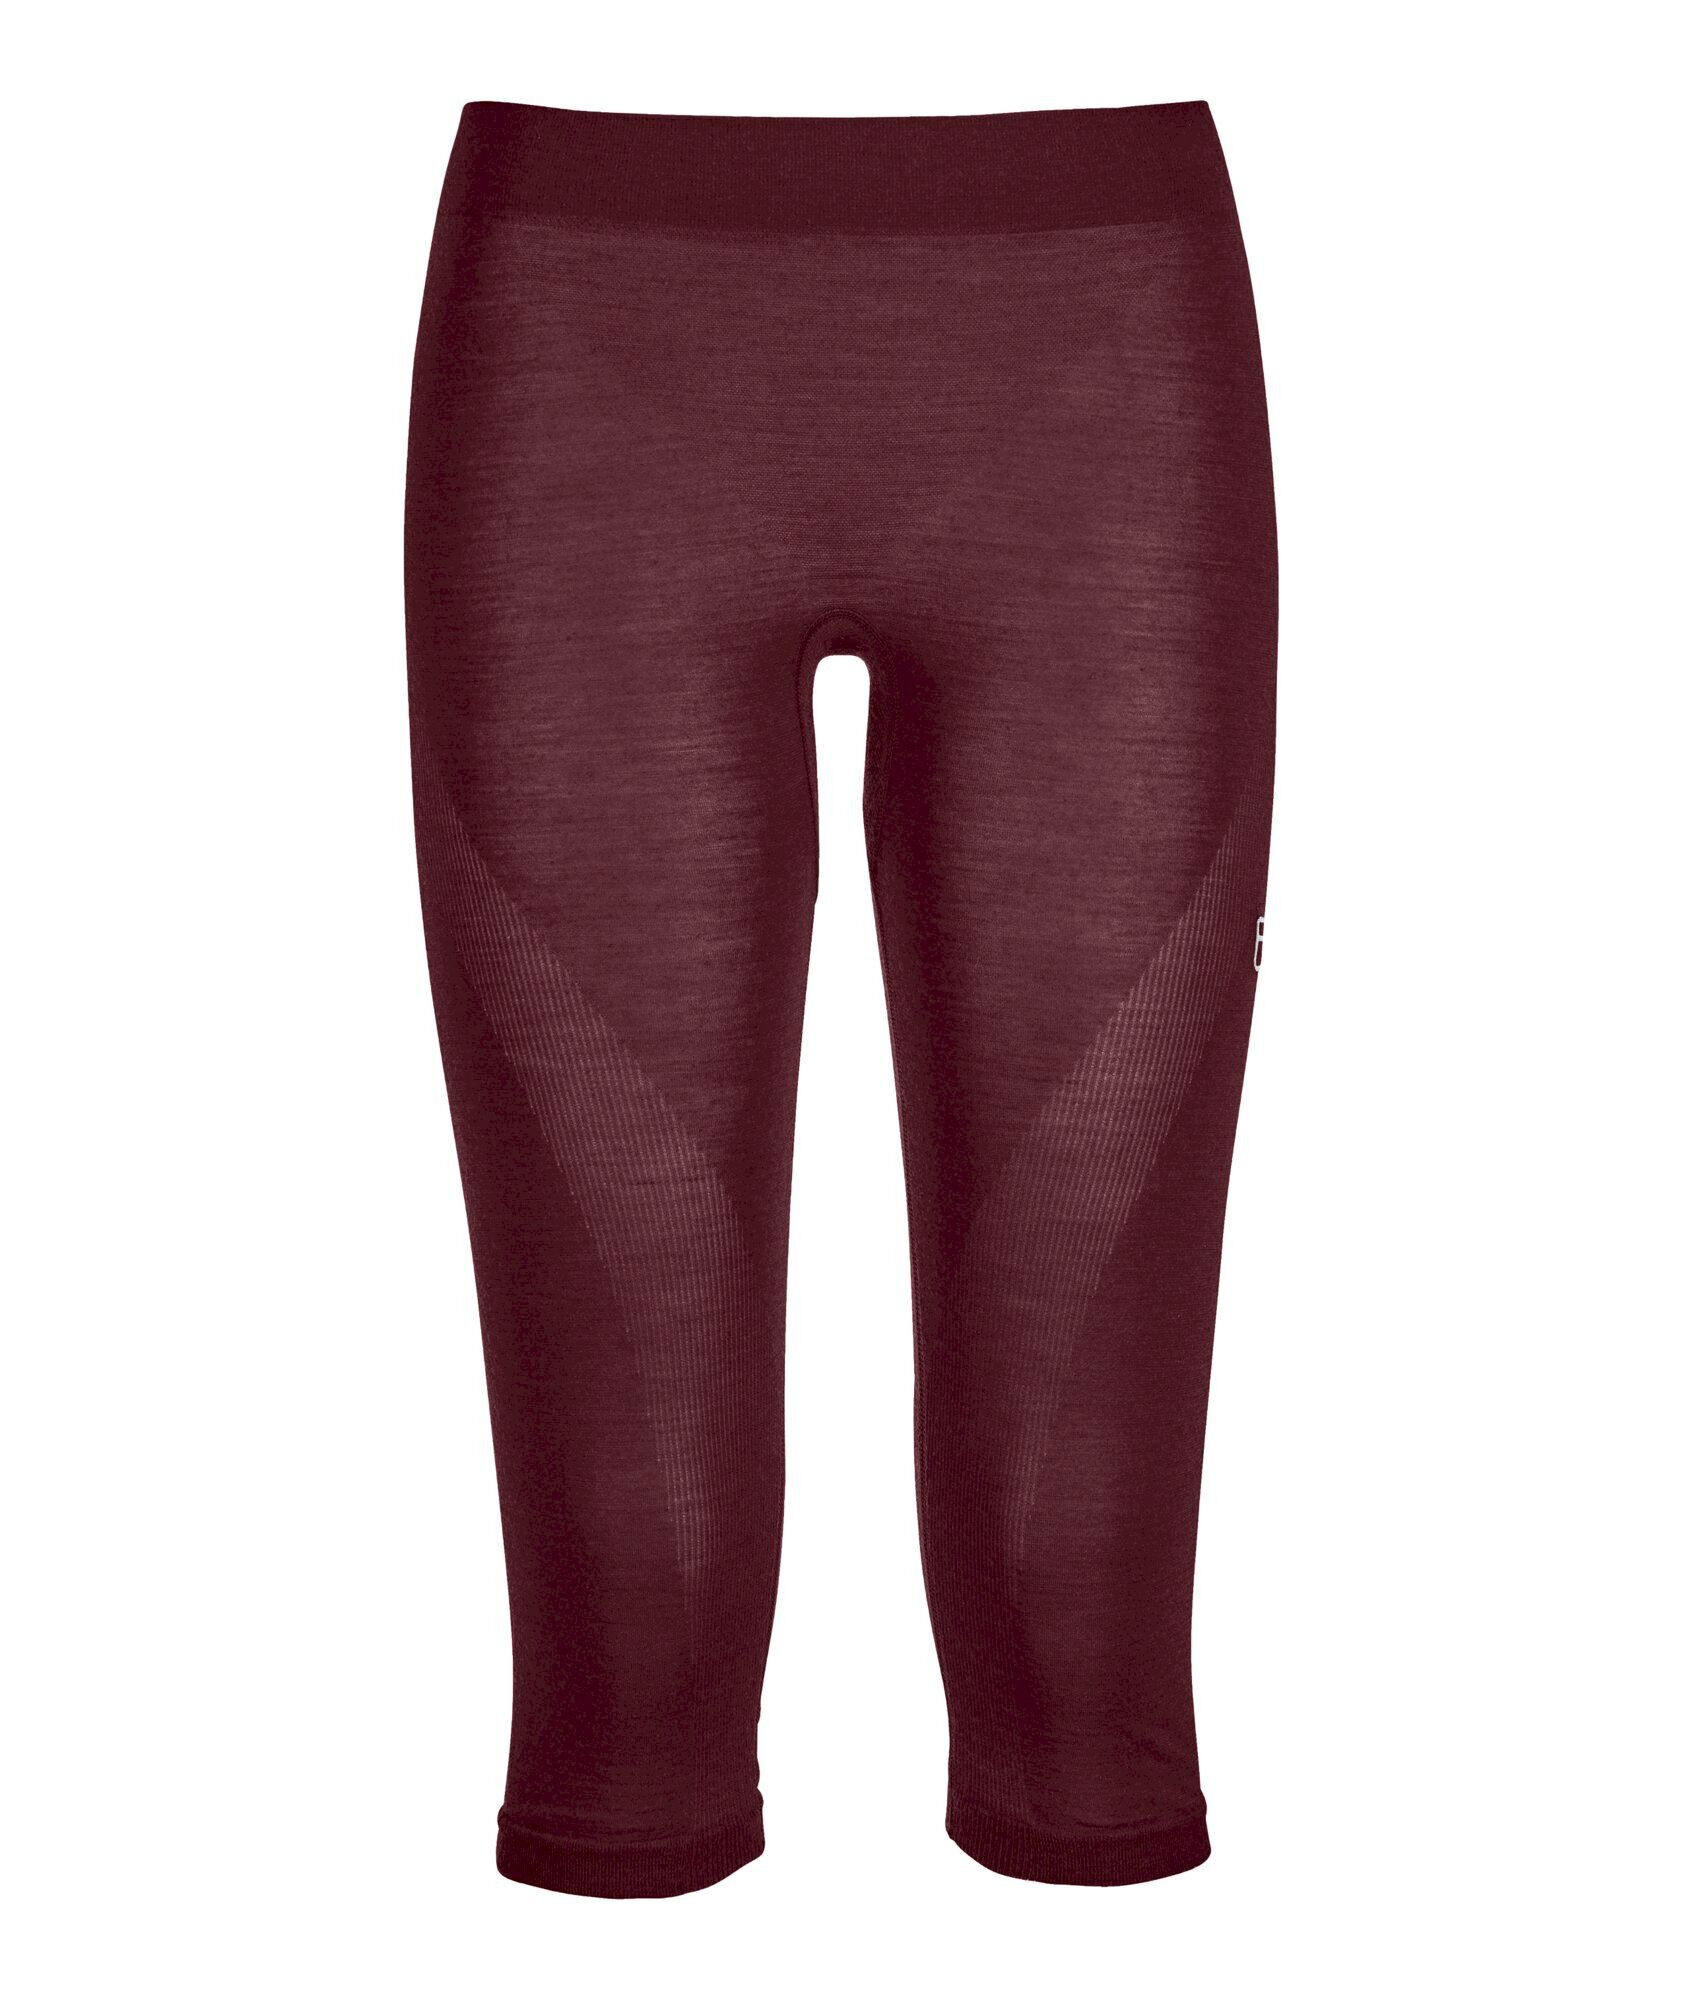 Ortovox 120 Comp Light Short Pants - Sous-vêtement mérinos femme | Hardloop